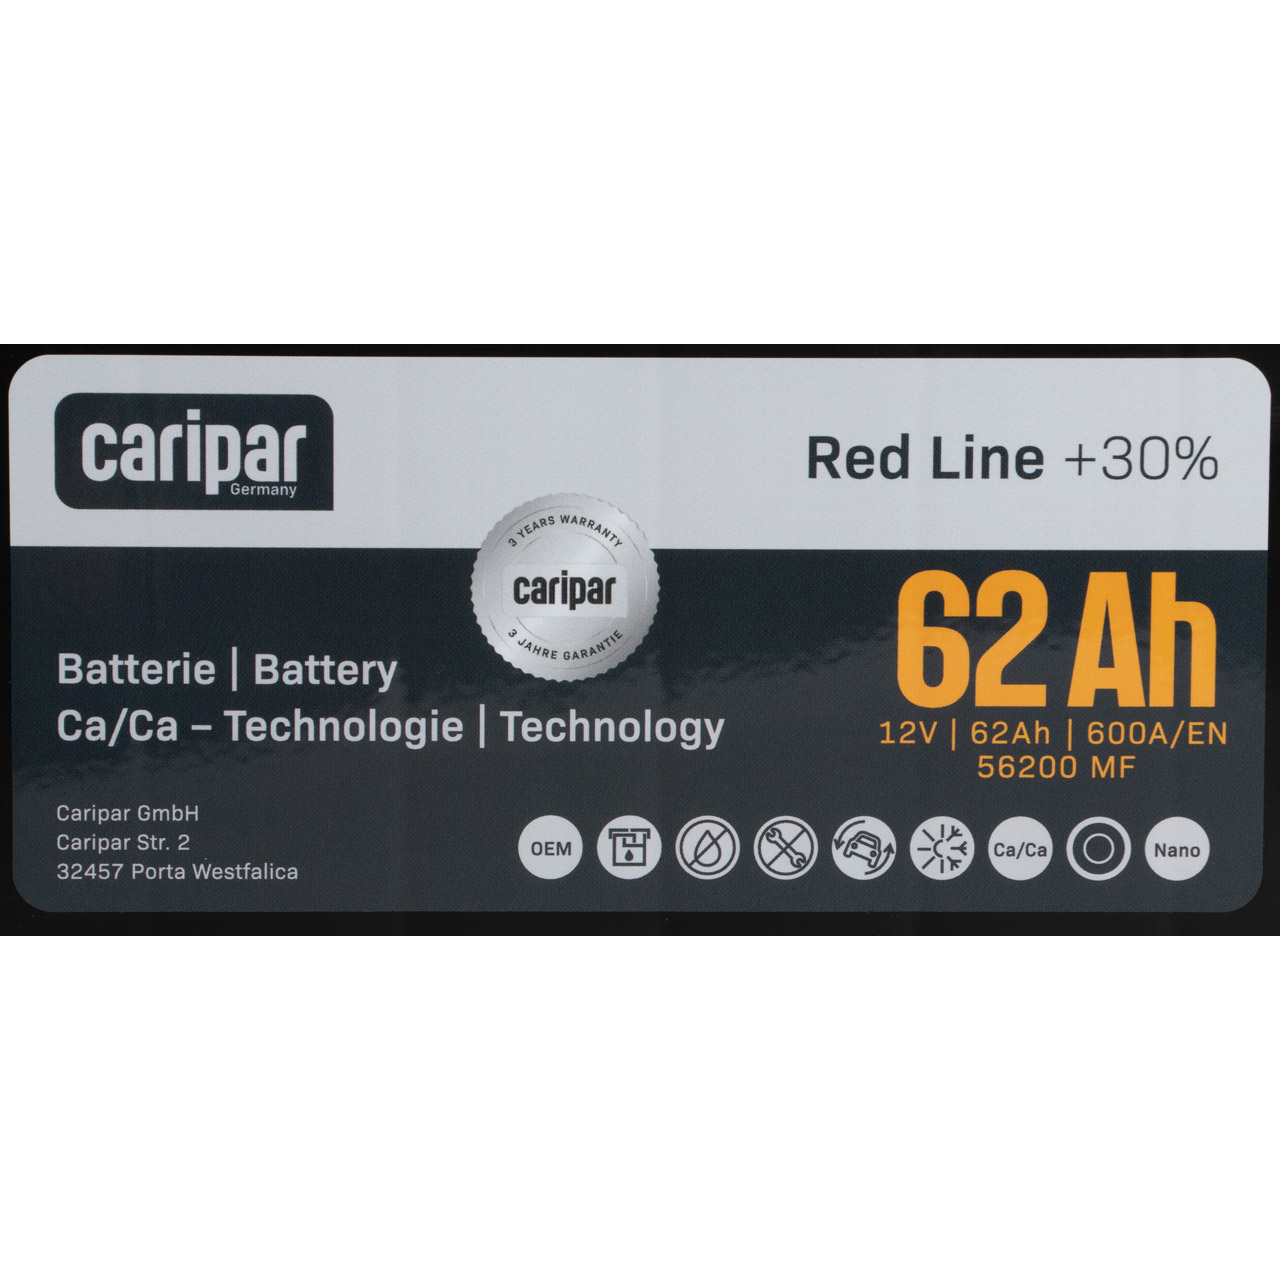 CARIPAR RED LINE +30% PKW KFZ Autobatterie Starterbatterie 12V 62Ah 600A/EN B13